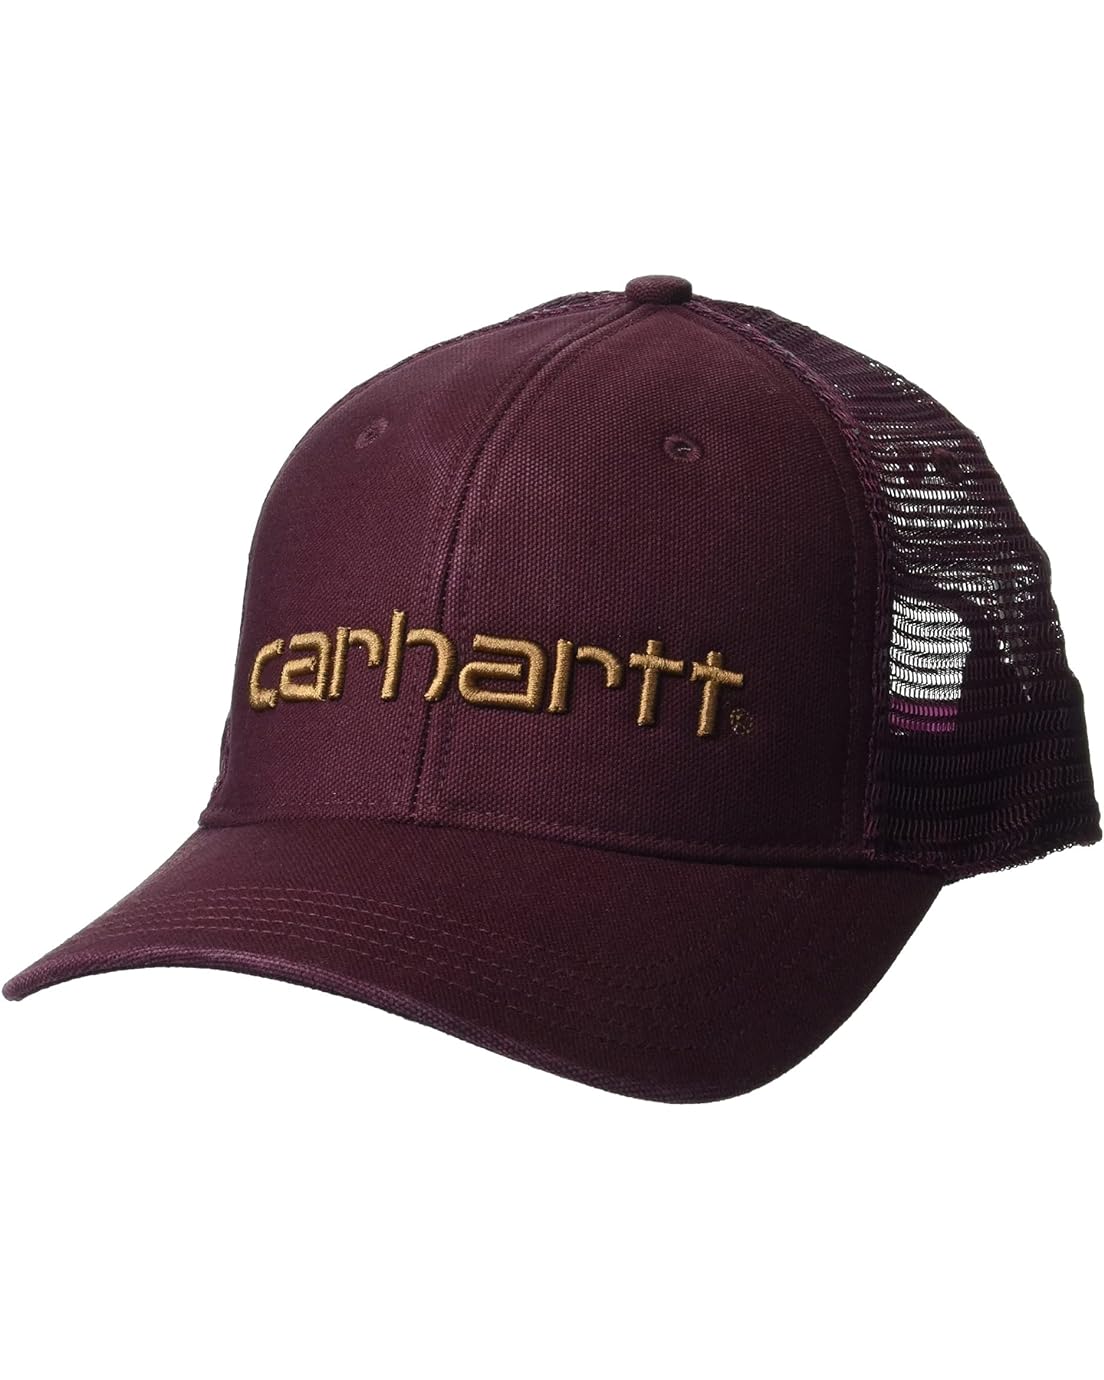 Carhartt Canvas Mesh-Back Cap